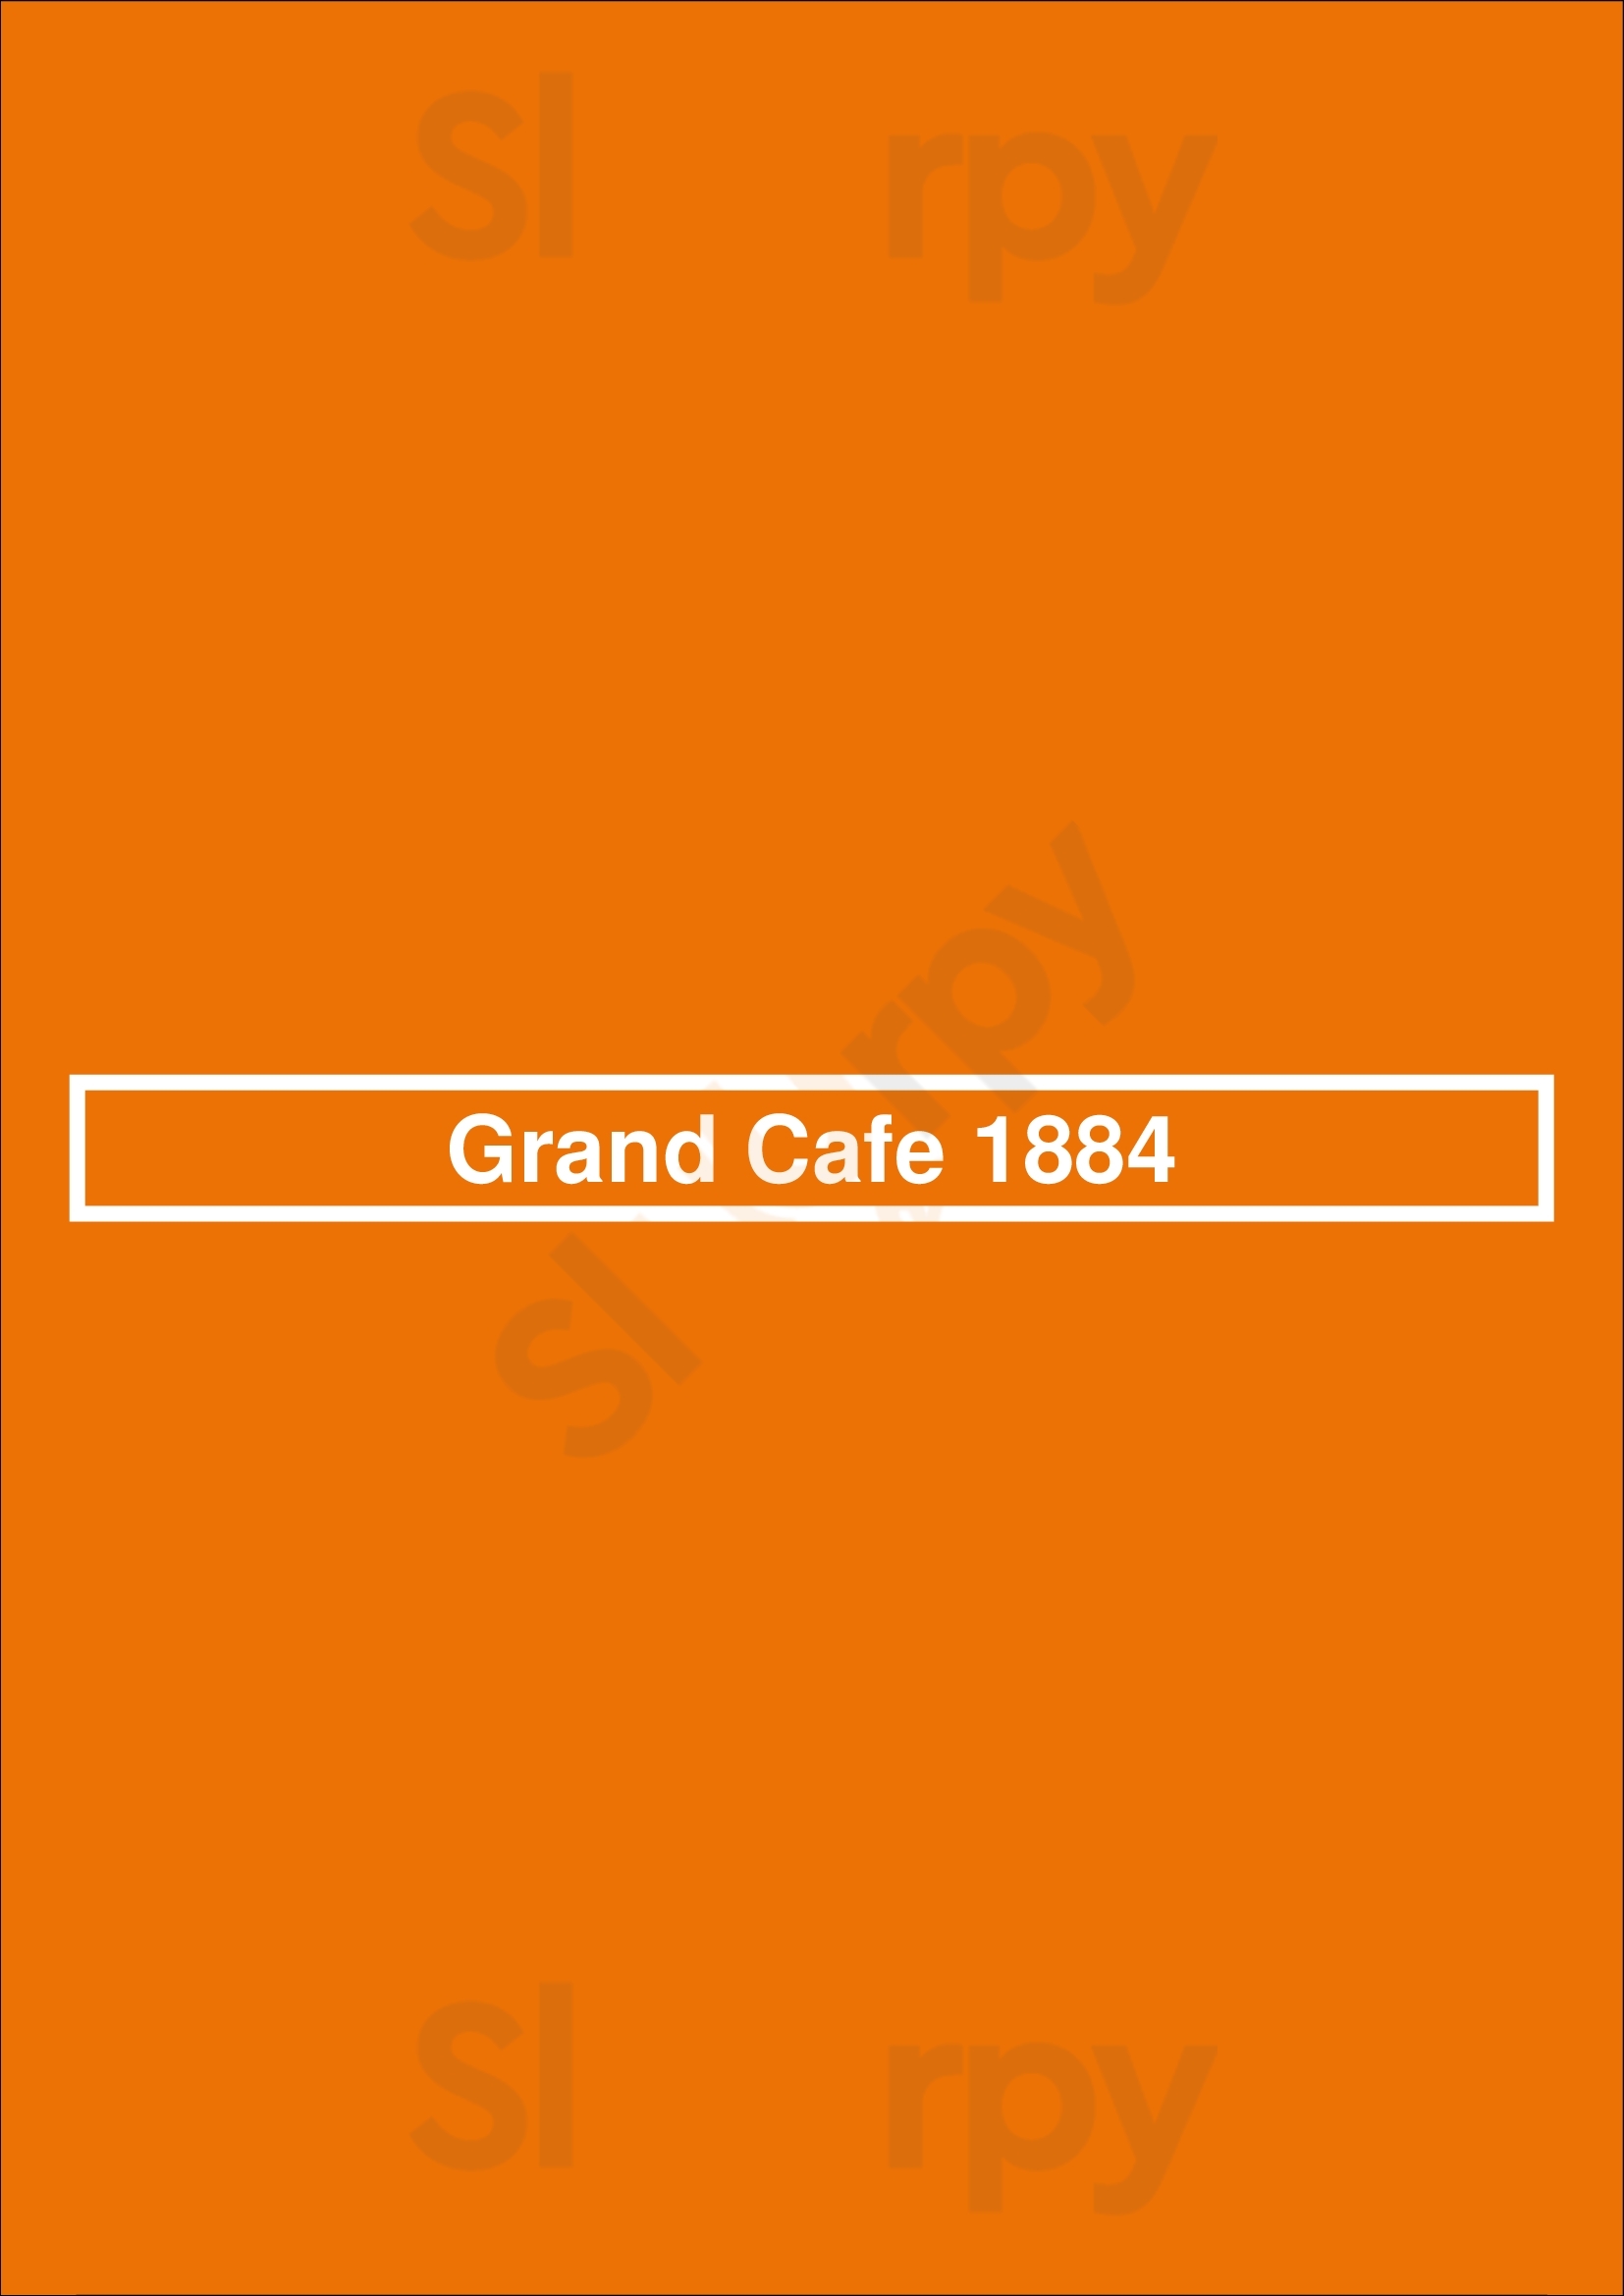 Grand Cafe 1884 Amsterdam Menu - 1